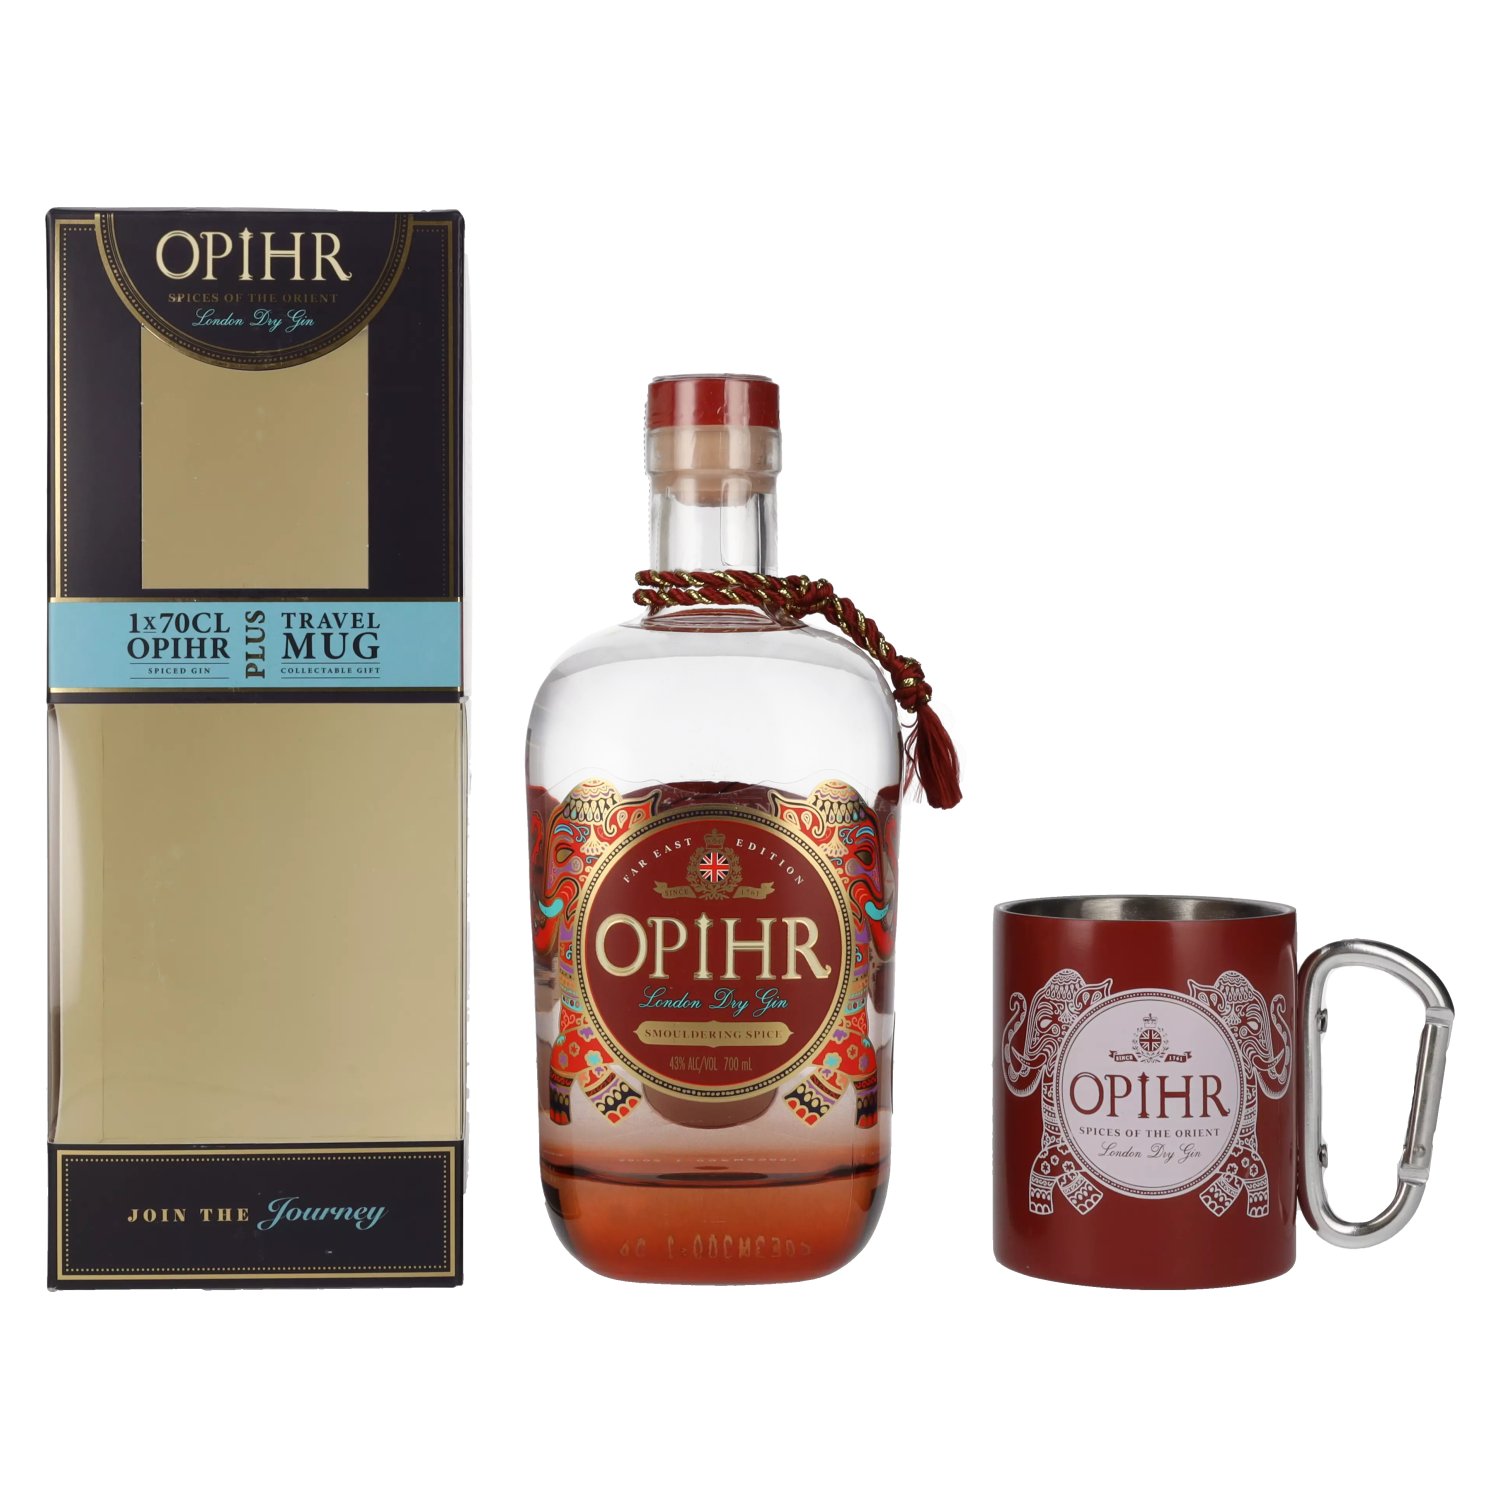 Opihr London Dry Gin Vol. EAST EDITION 43% mit FAR Geschenkbox 0,7l Travel Mug in